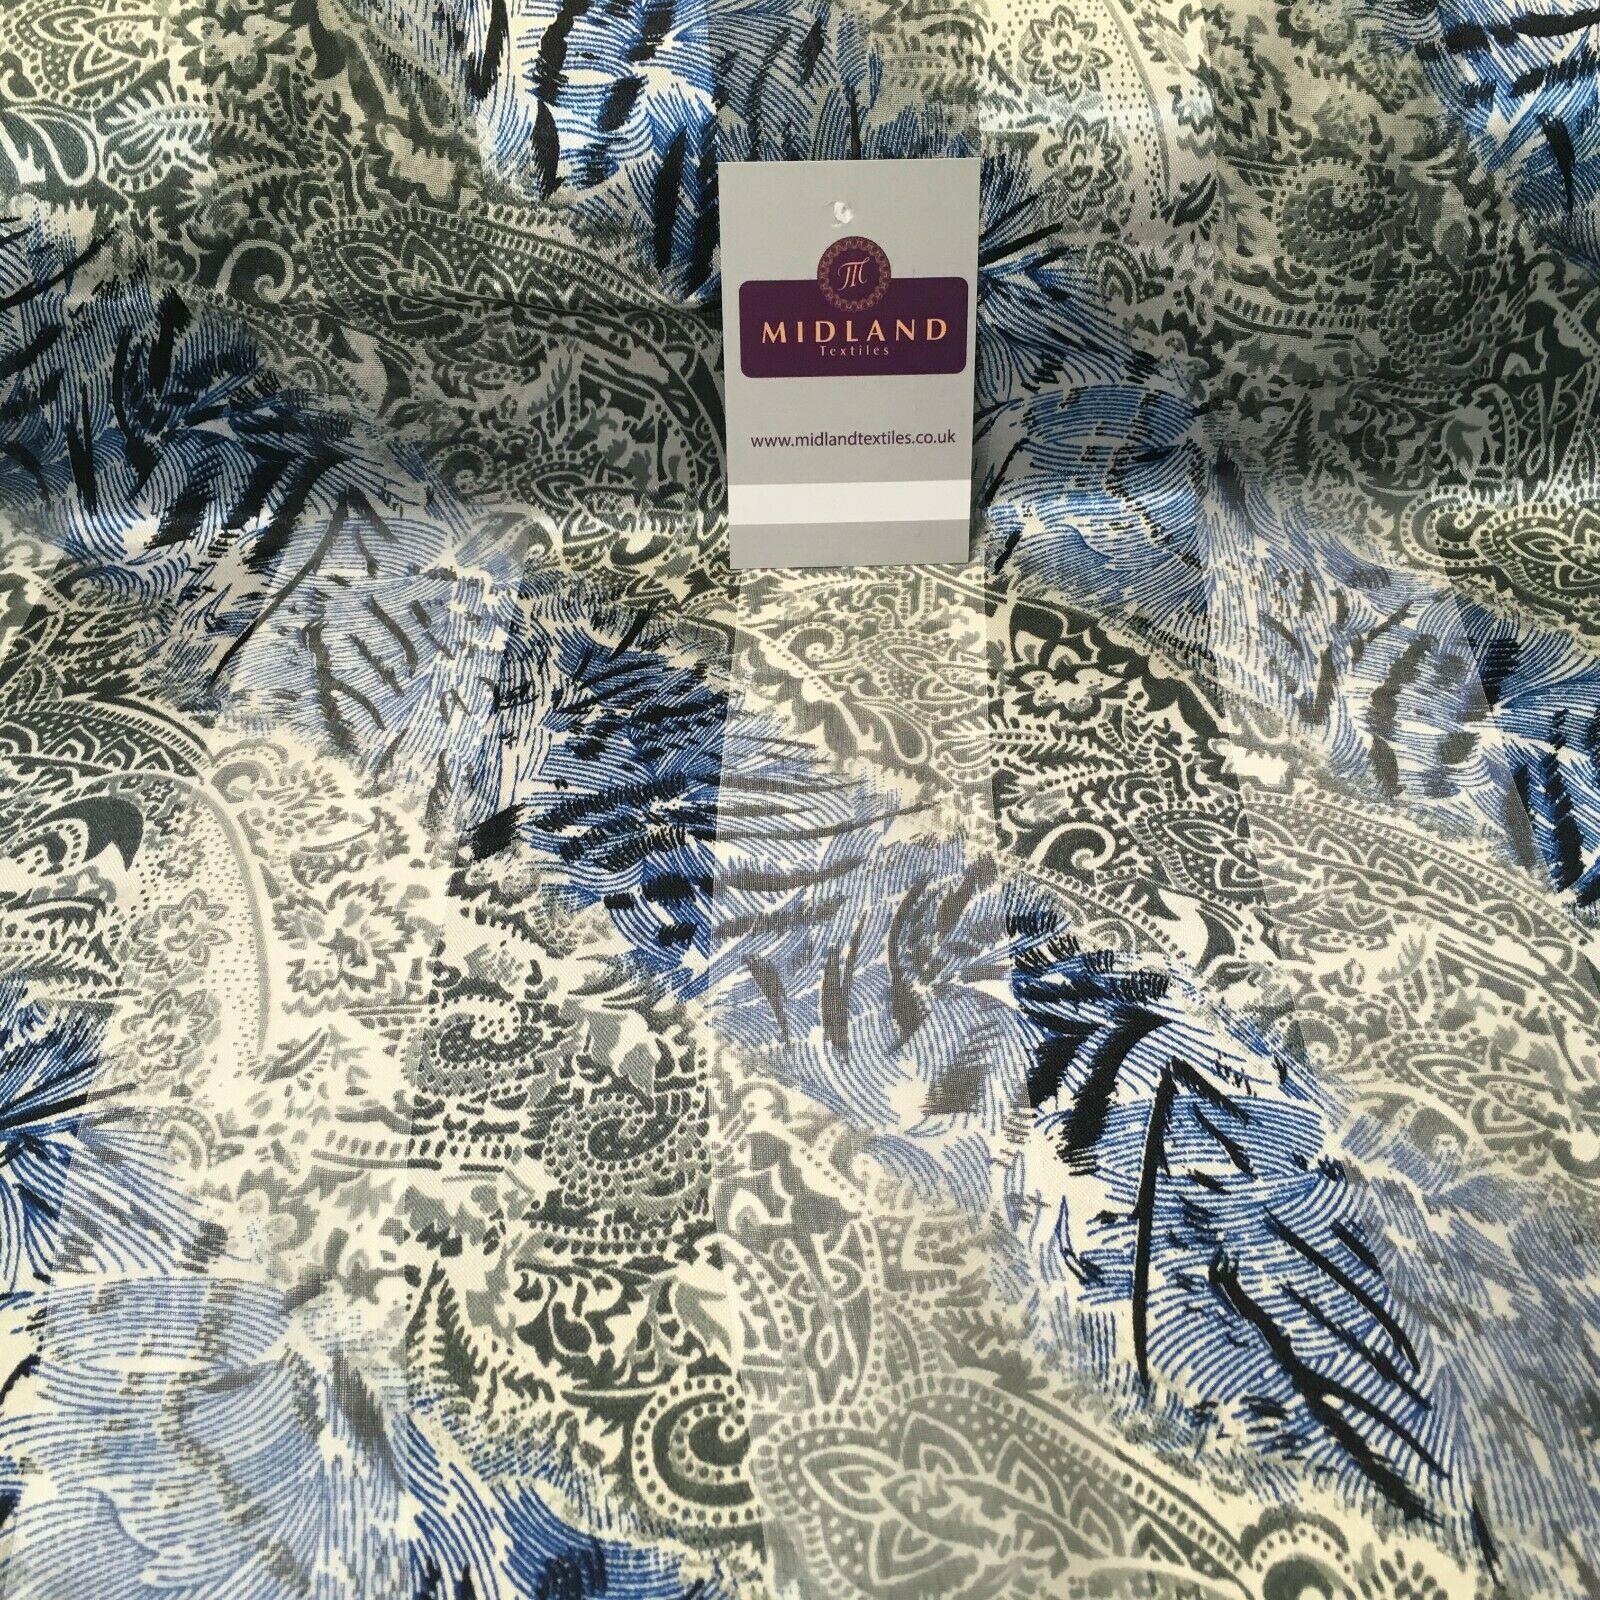 Animal Paisley Printed Satin Striped Dress fabric 150cm Wide MA1049 Mtex